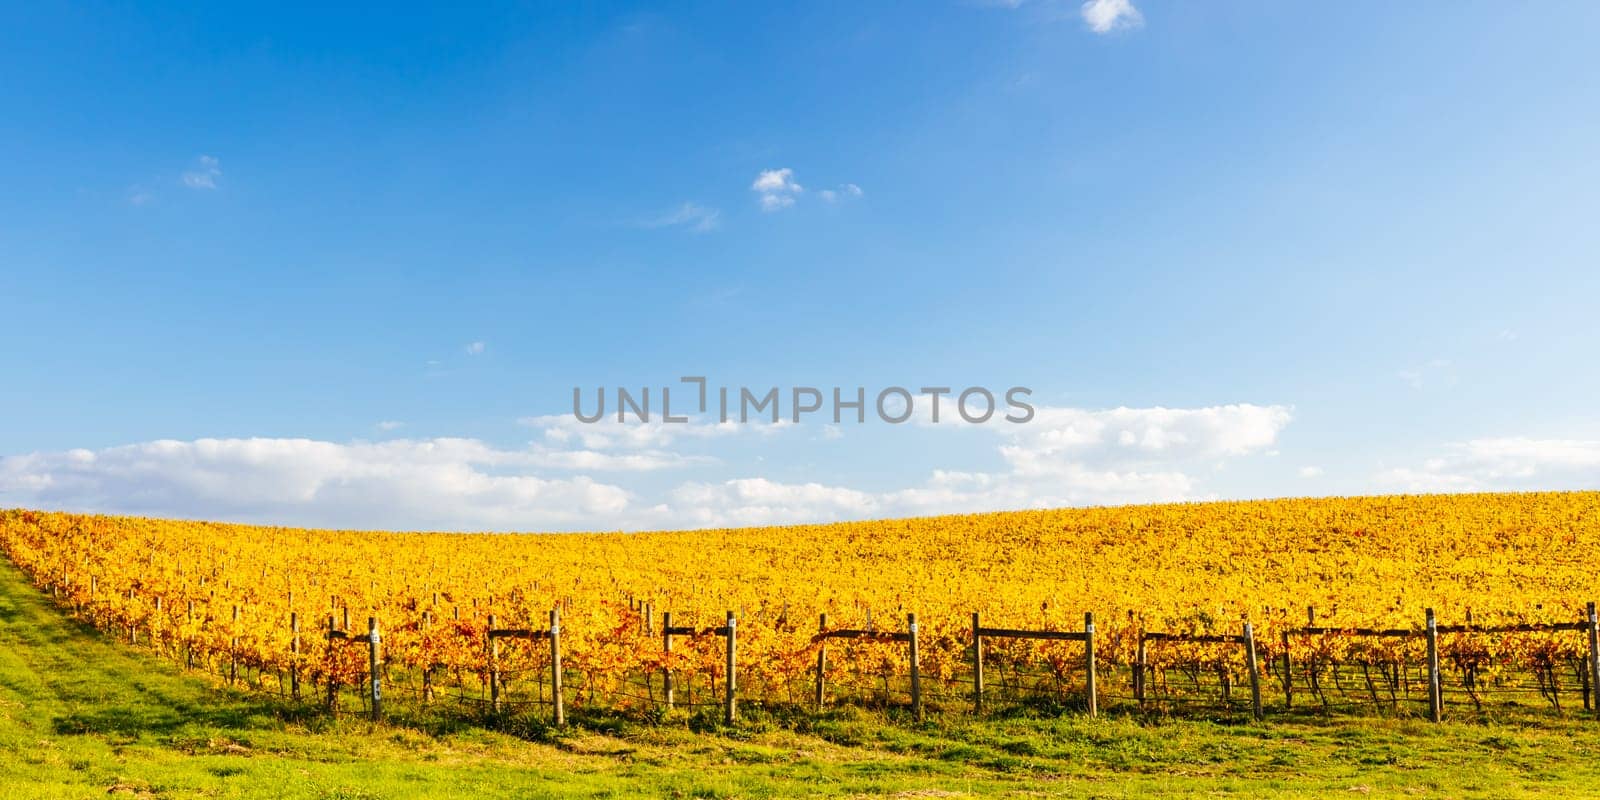 Yarra Valley Vineyard and Landscape in Australia by FiledIMAGE